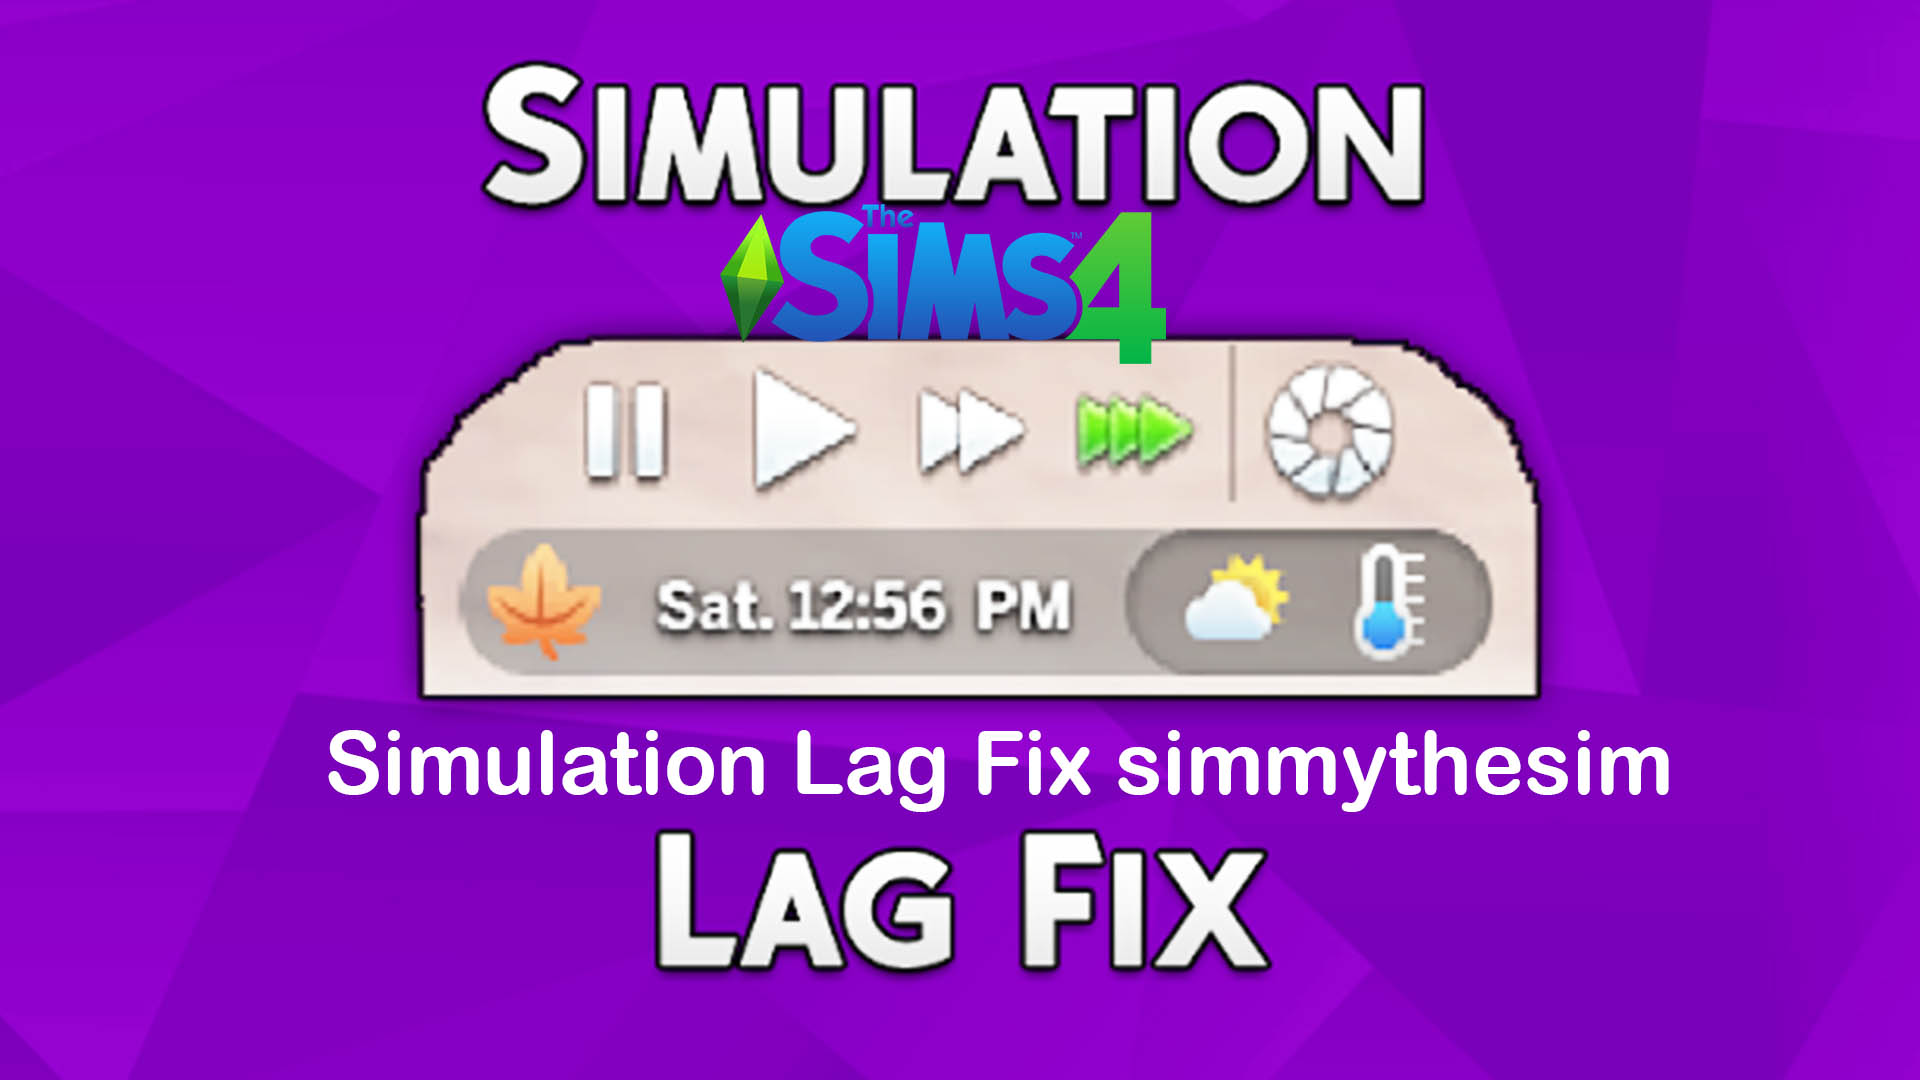 The Sims 4 Simulation Lag Fix simmythesim Sims 4 Update